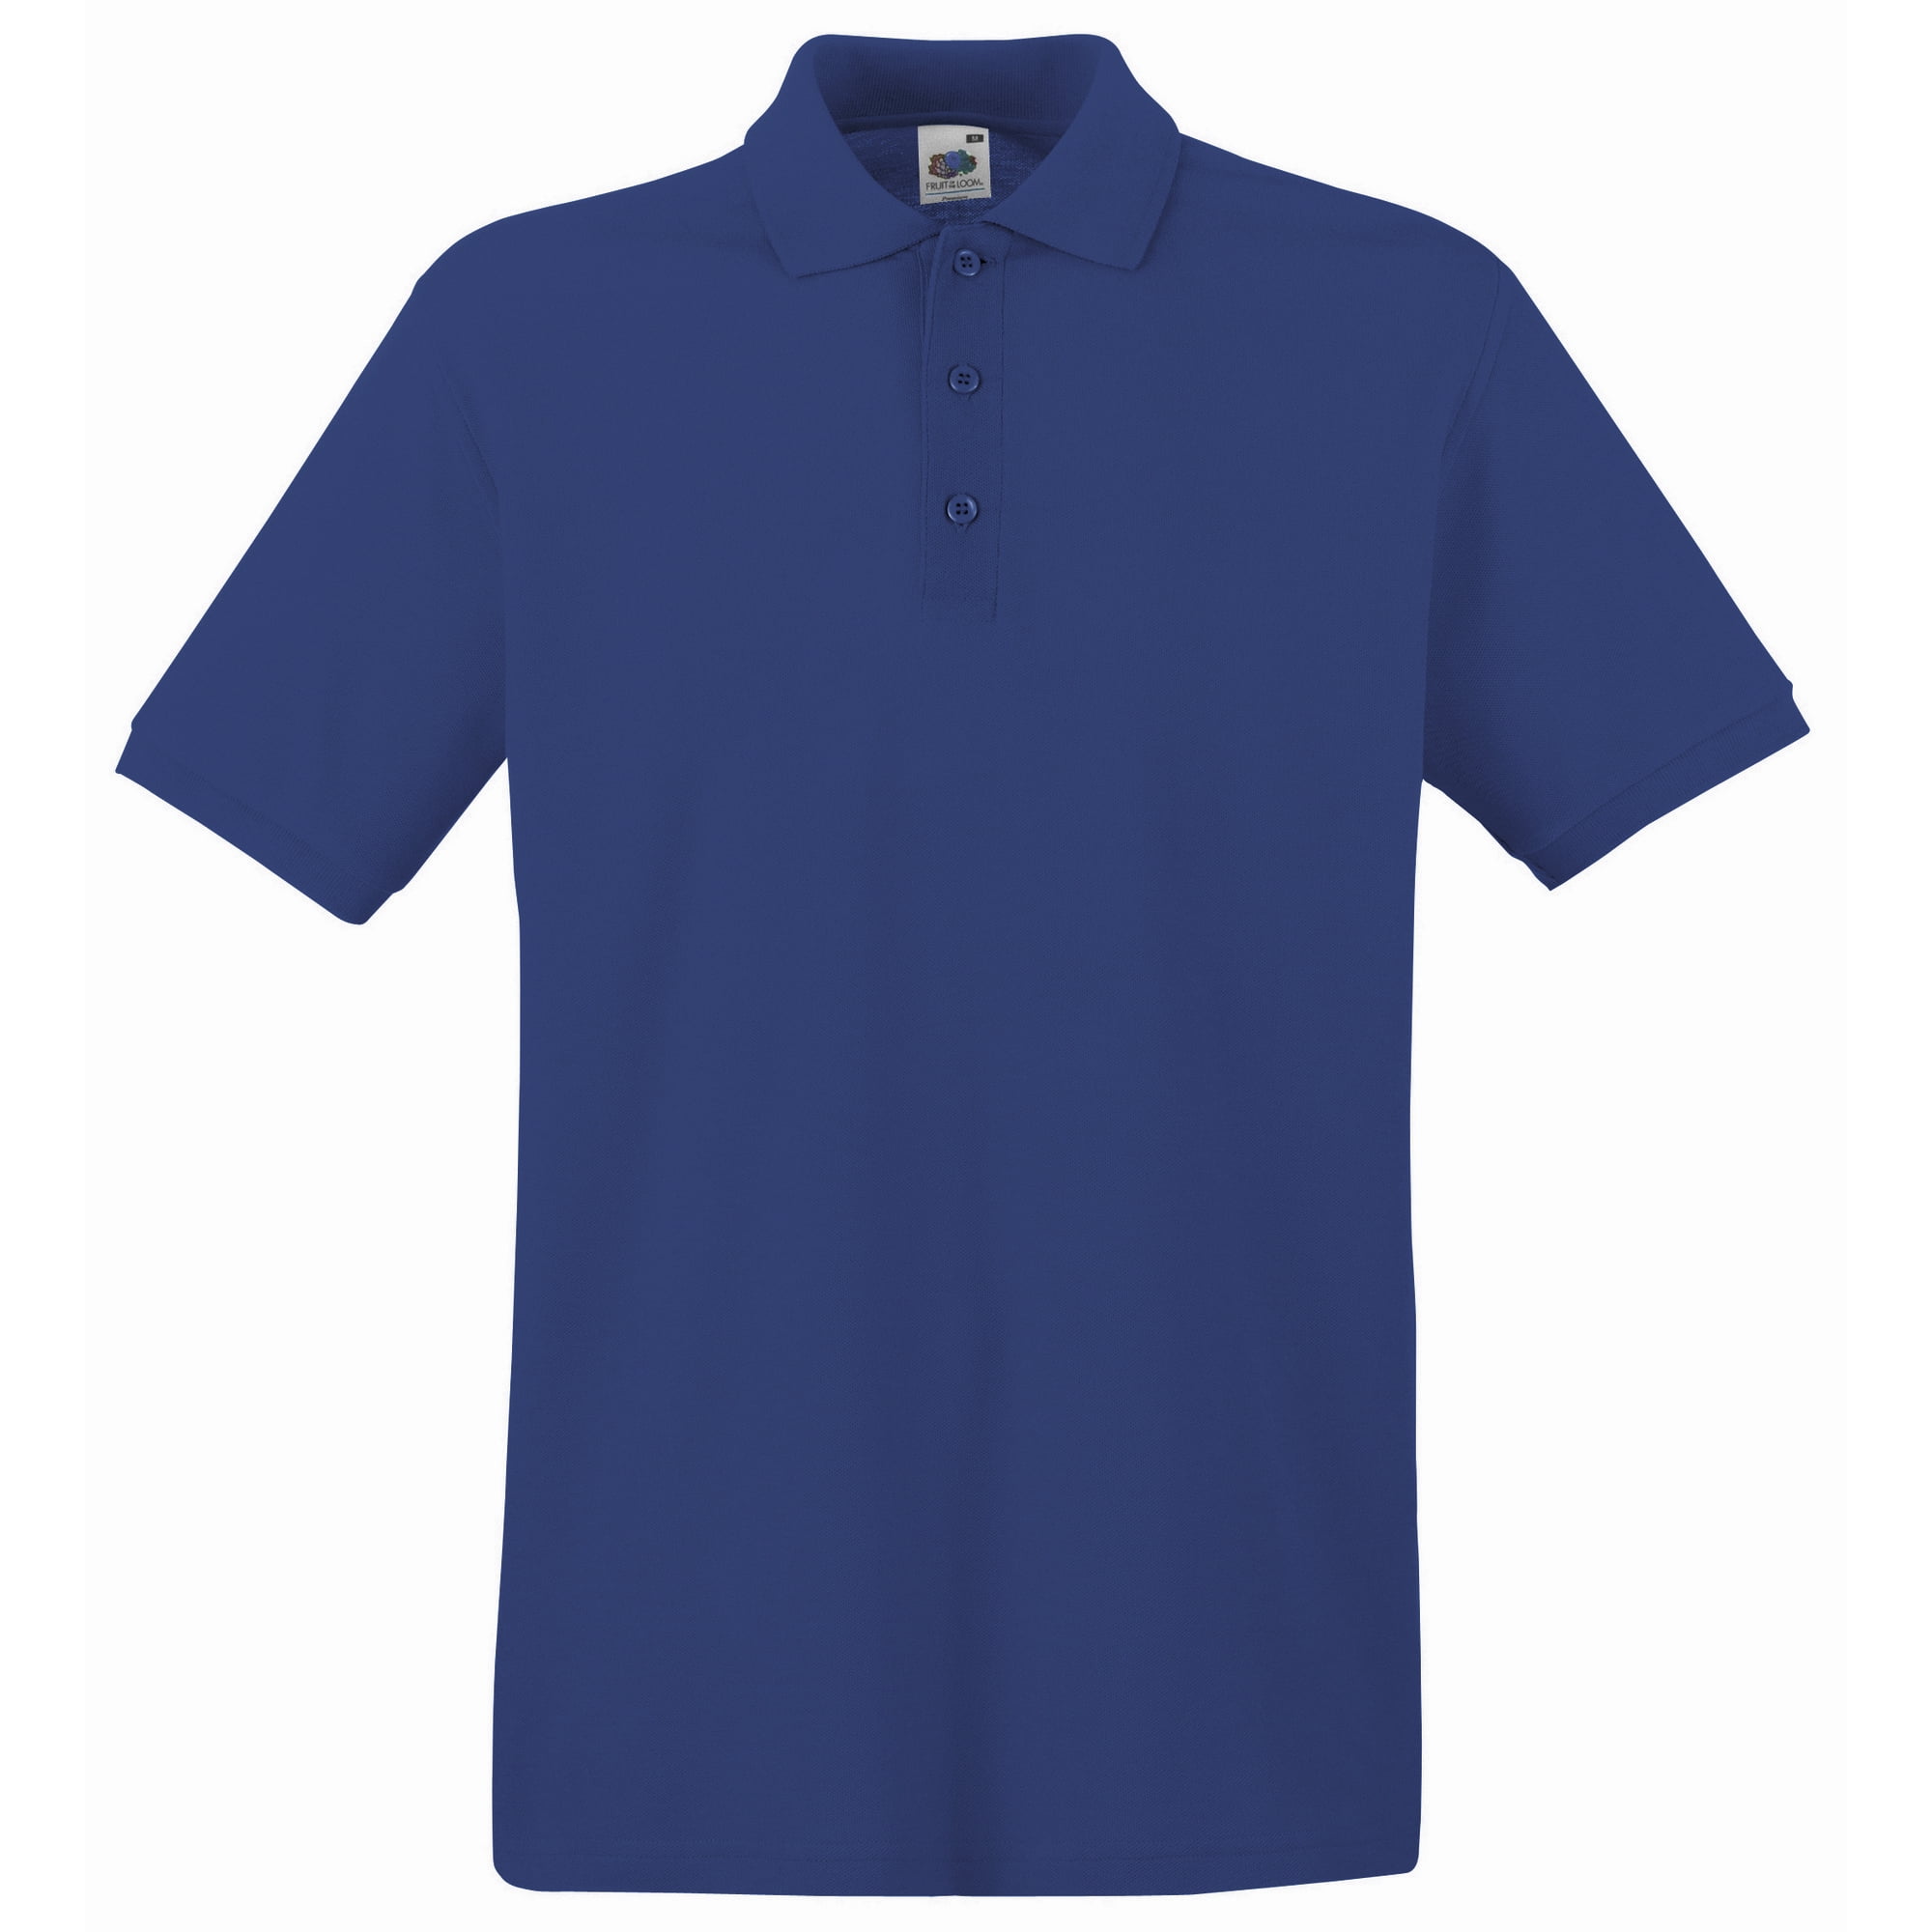 Fruit of the Loom Men's Premium Short Sleeve Polo Shirt